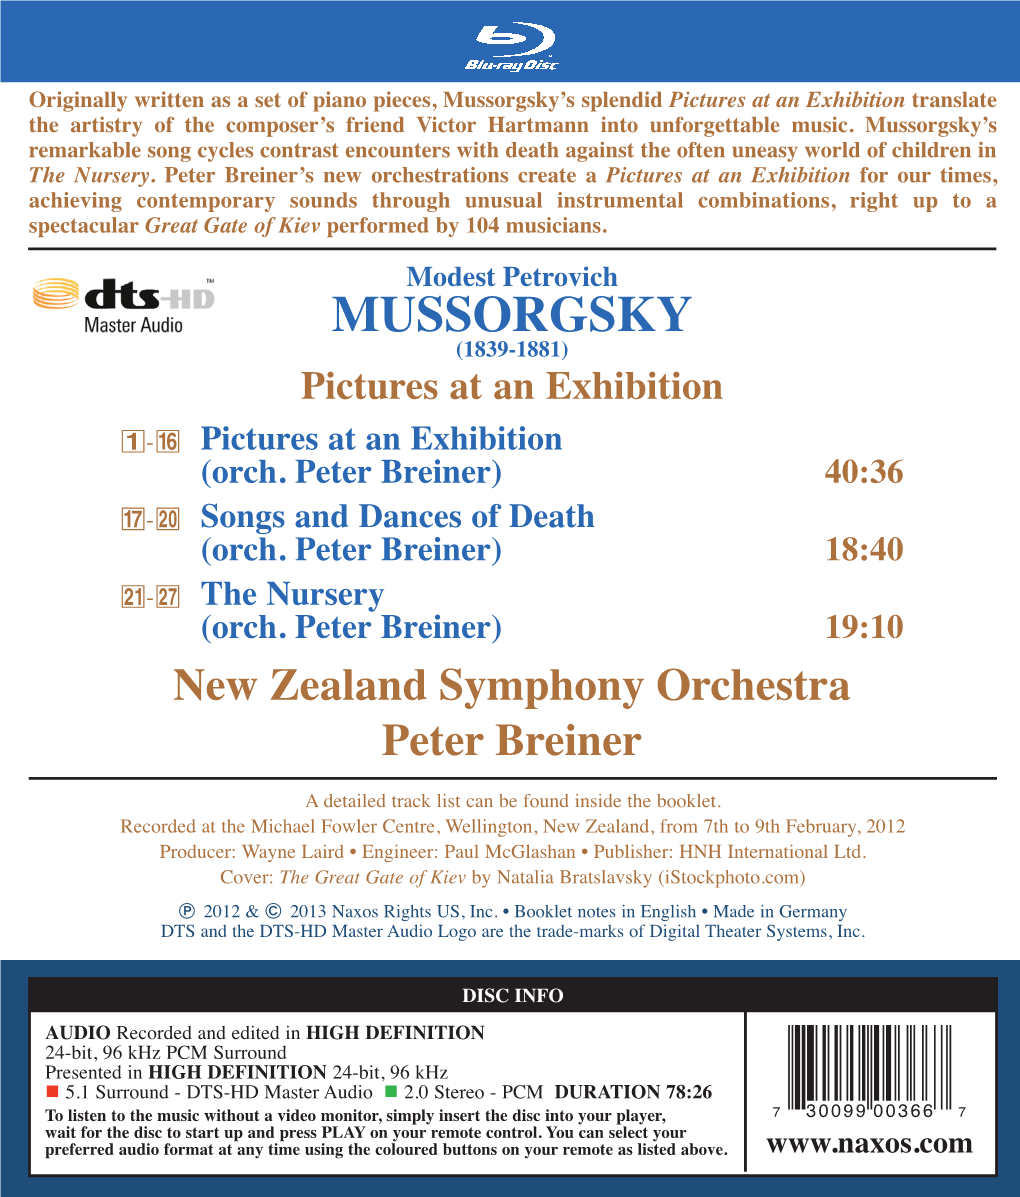 Mussorgsky NBD0036 Fb Mussorgsky 13/09/2013 09:34 Page 1